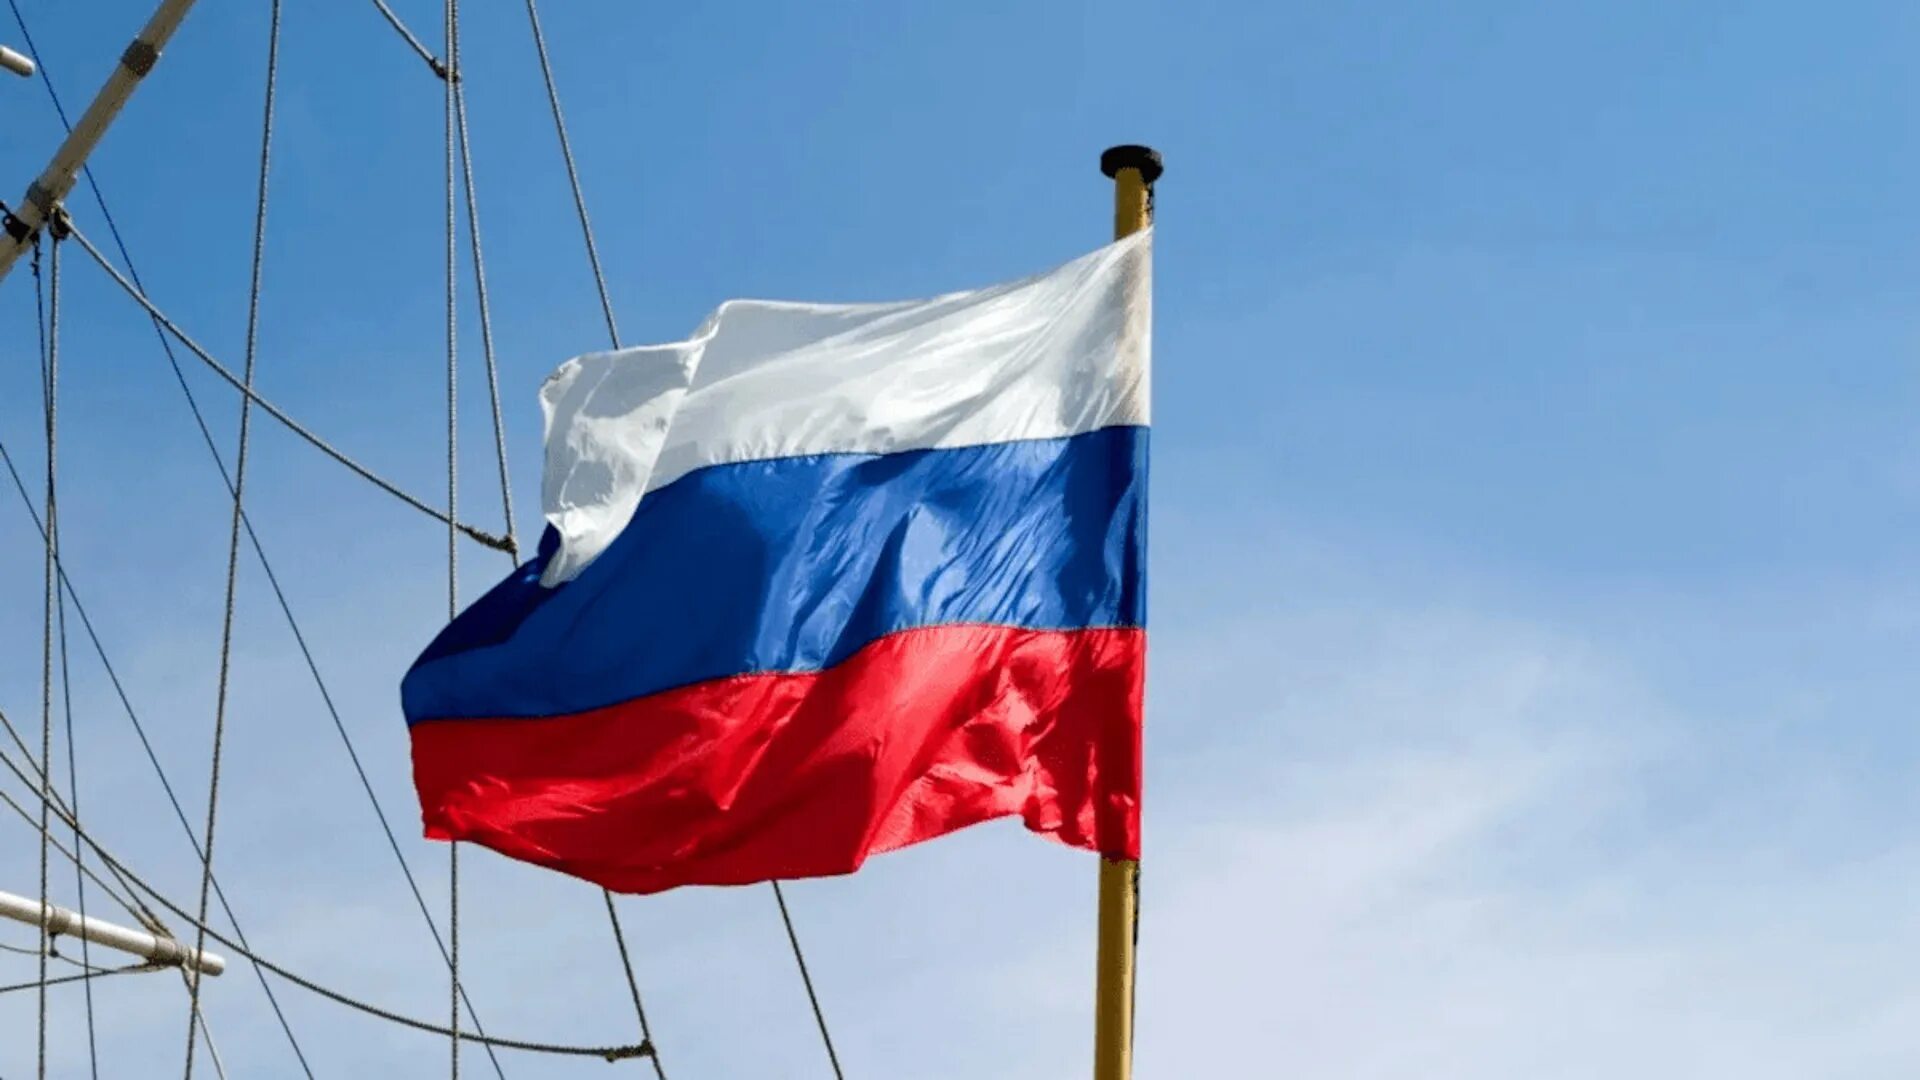 Государственный флаг судна. Флагшток на корабле. Судно под российским флагом. Флаг на корабле. Флаг России на корабле.